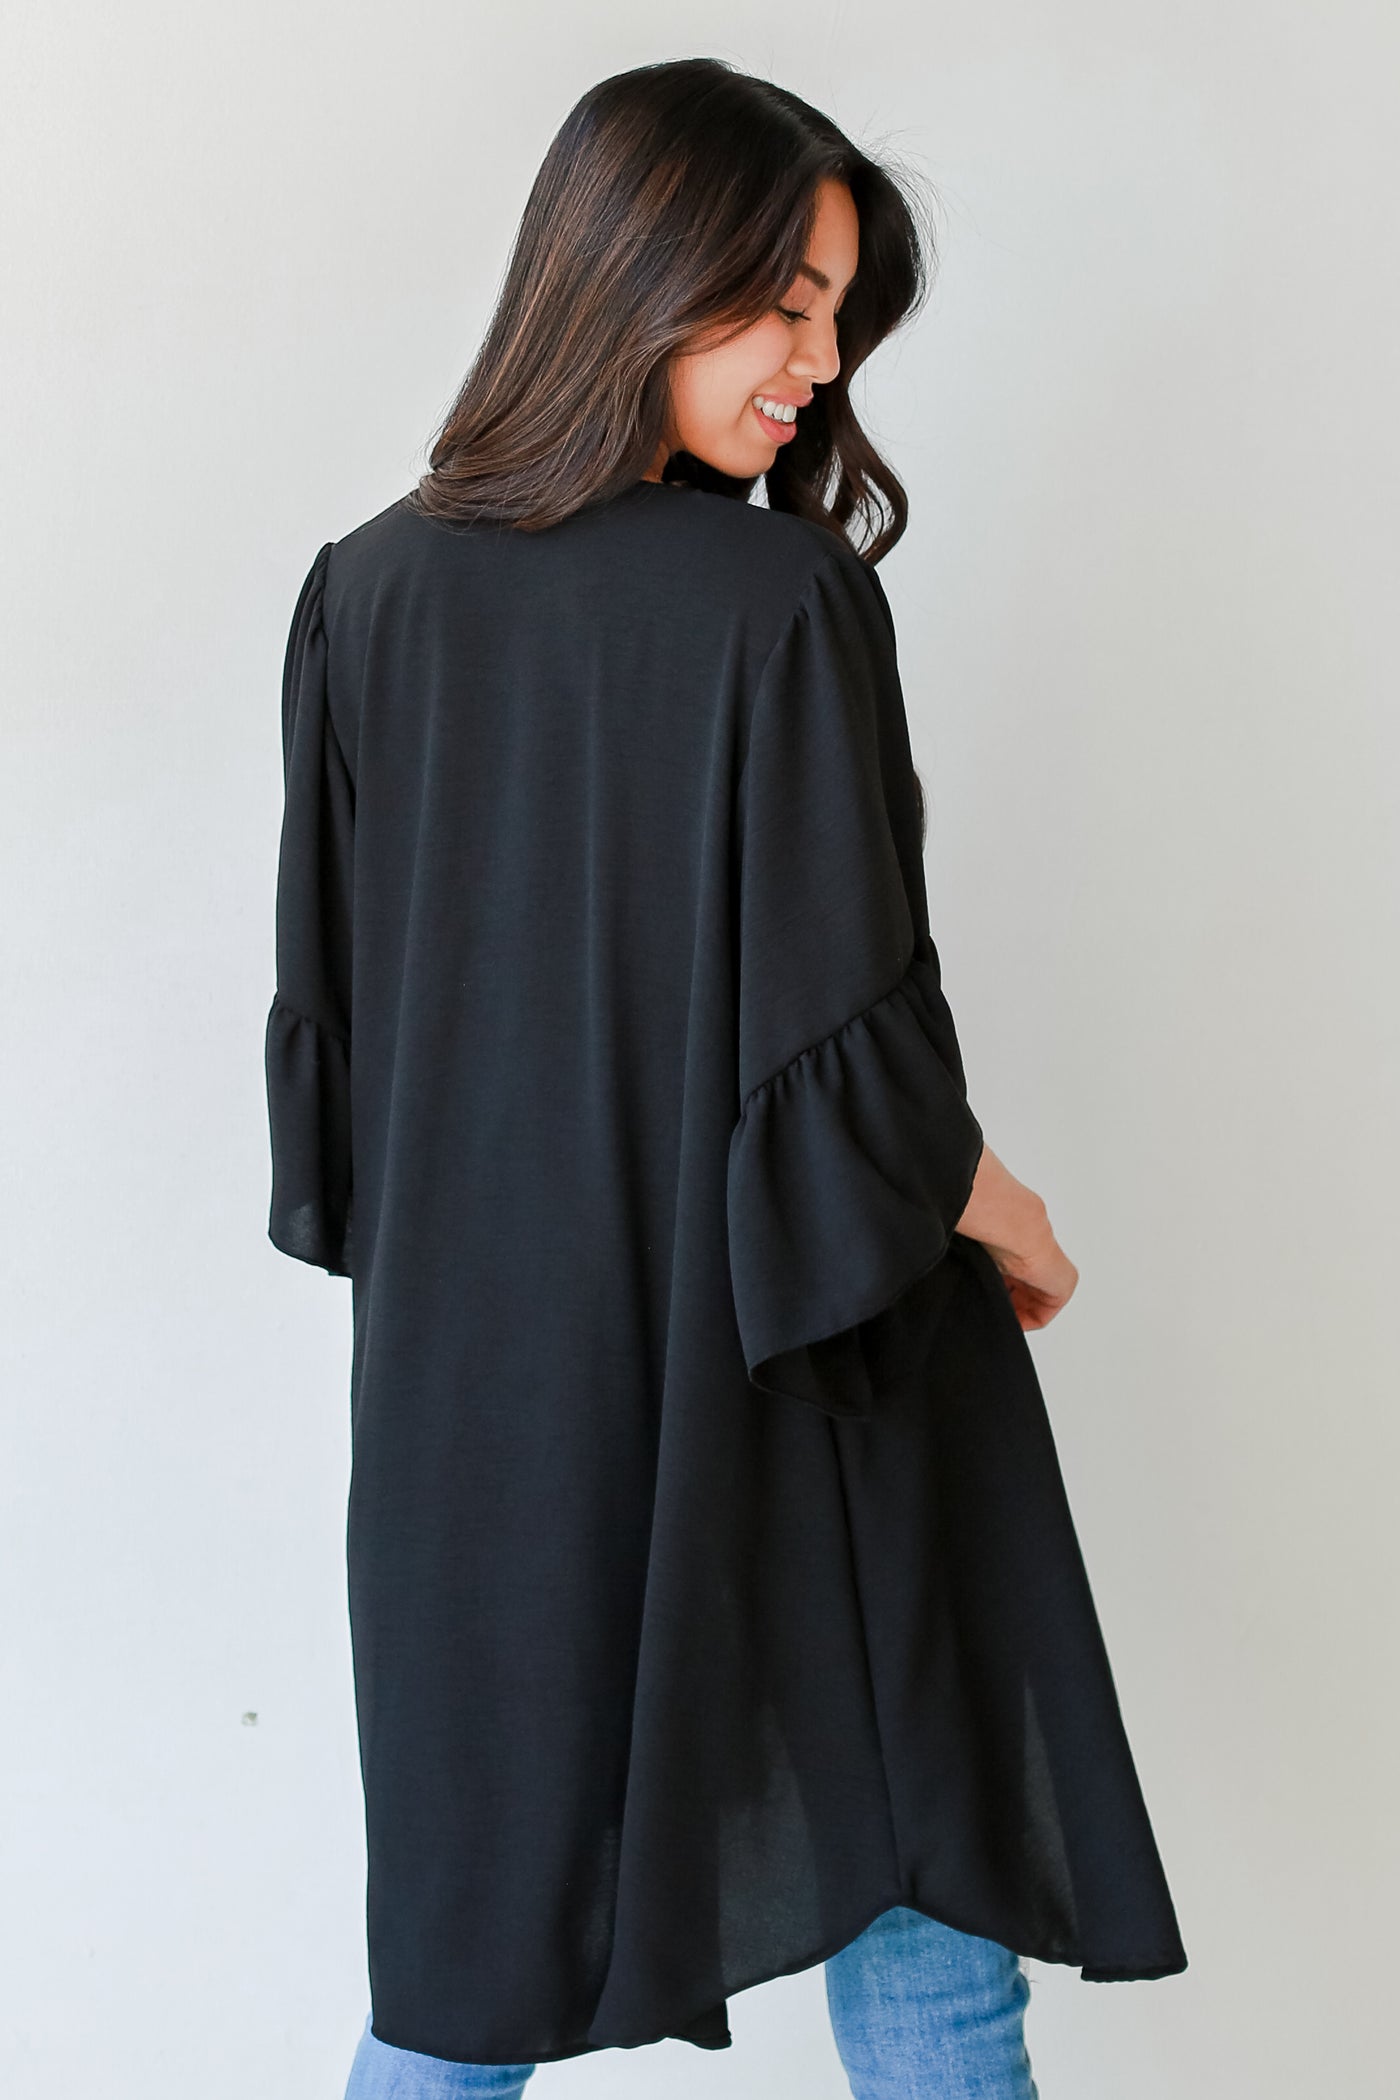 Ruffle Kimono in black back view